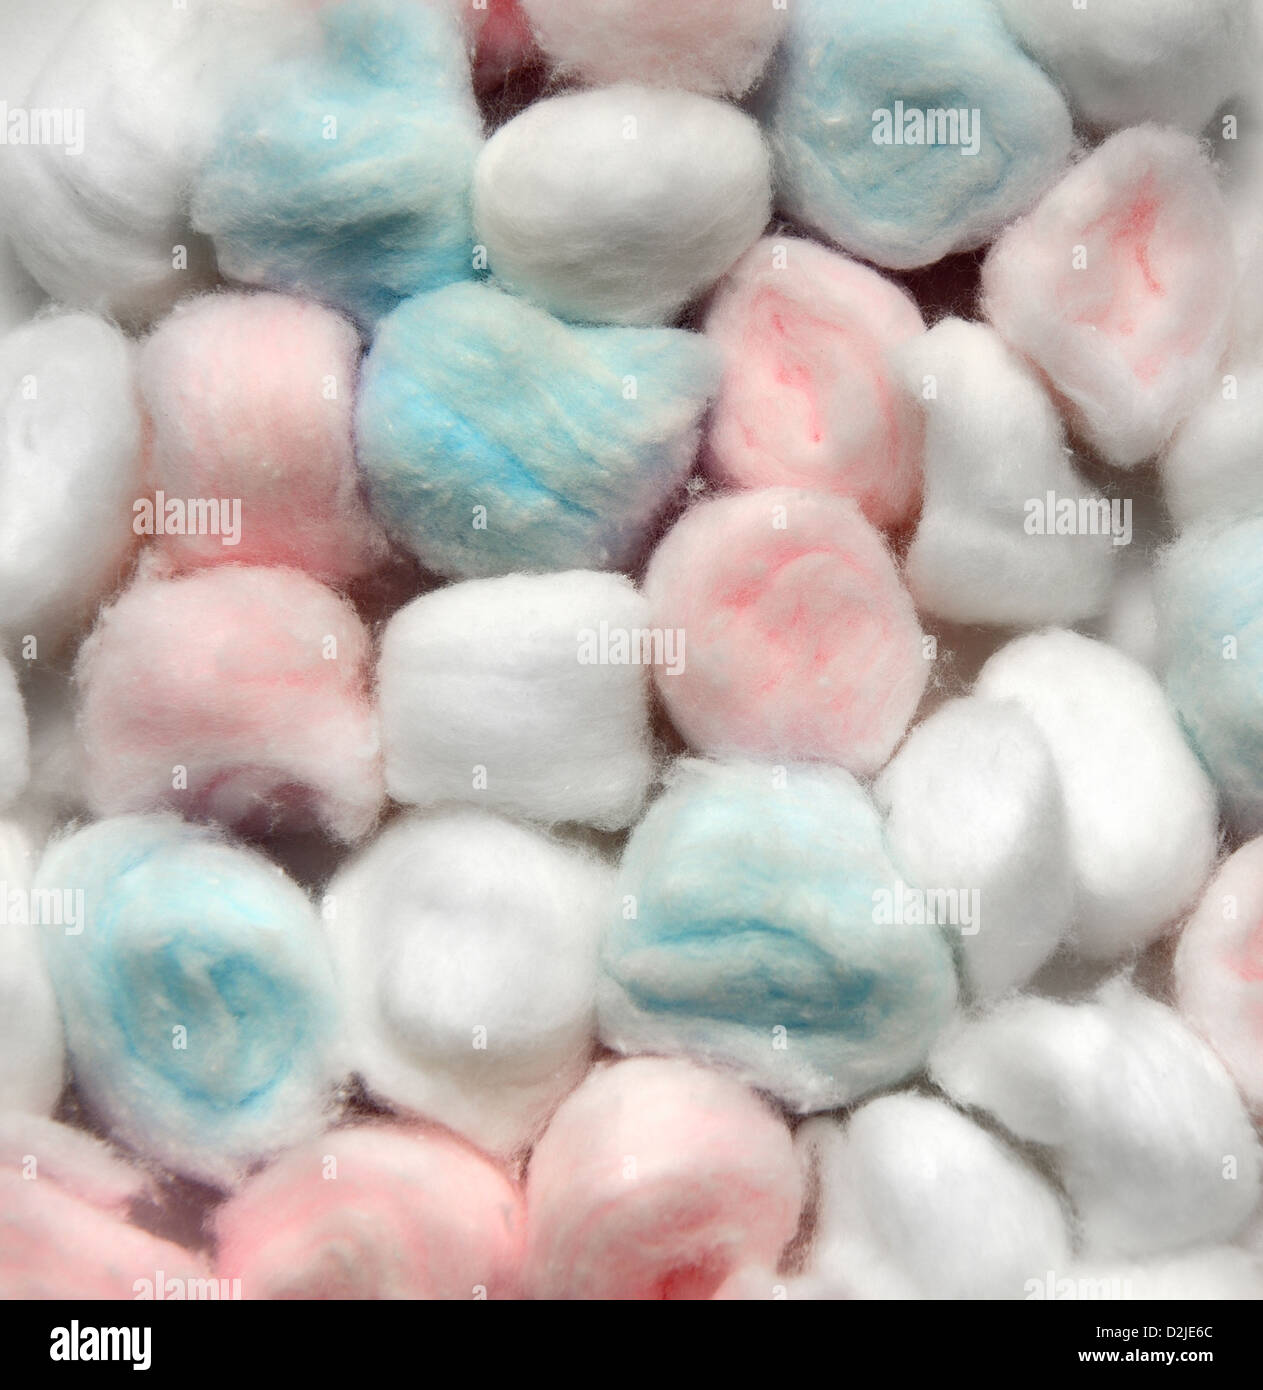 Colorful Small Cotton Balls Inside A Striped Box Stock Photo